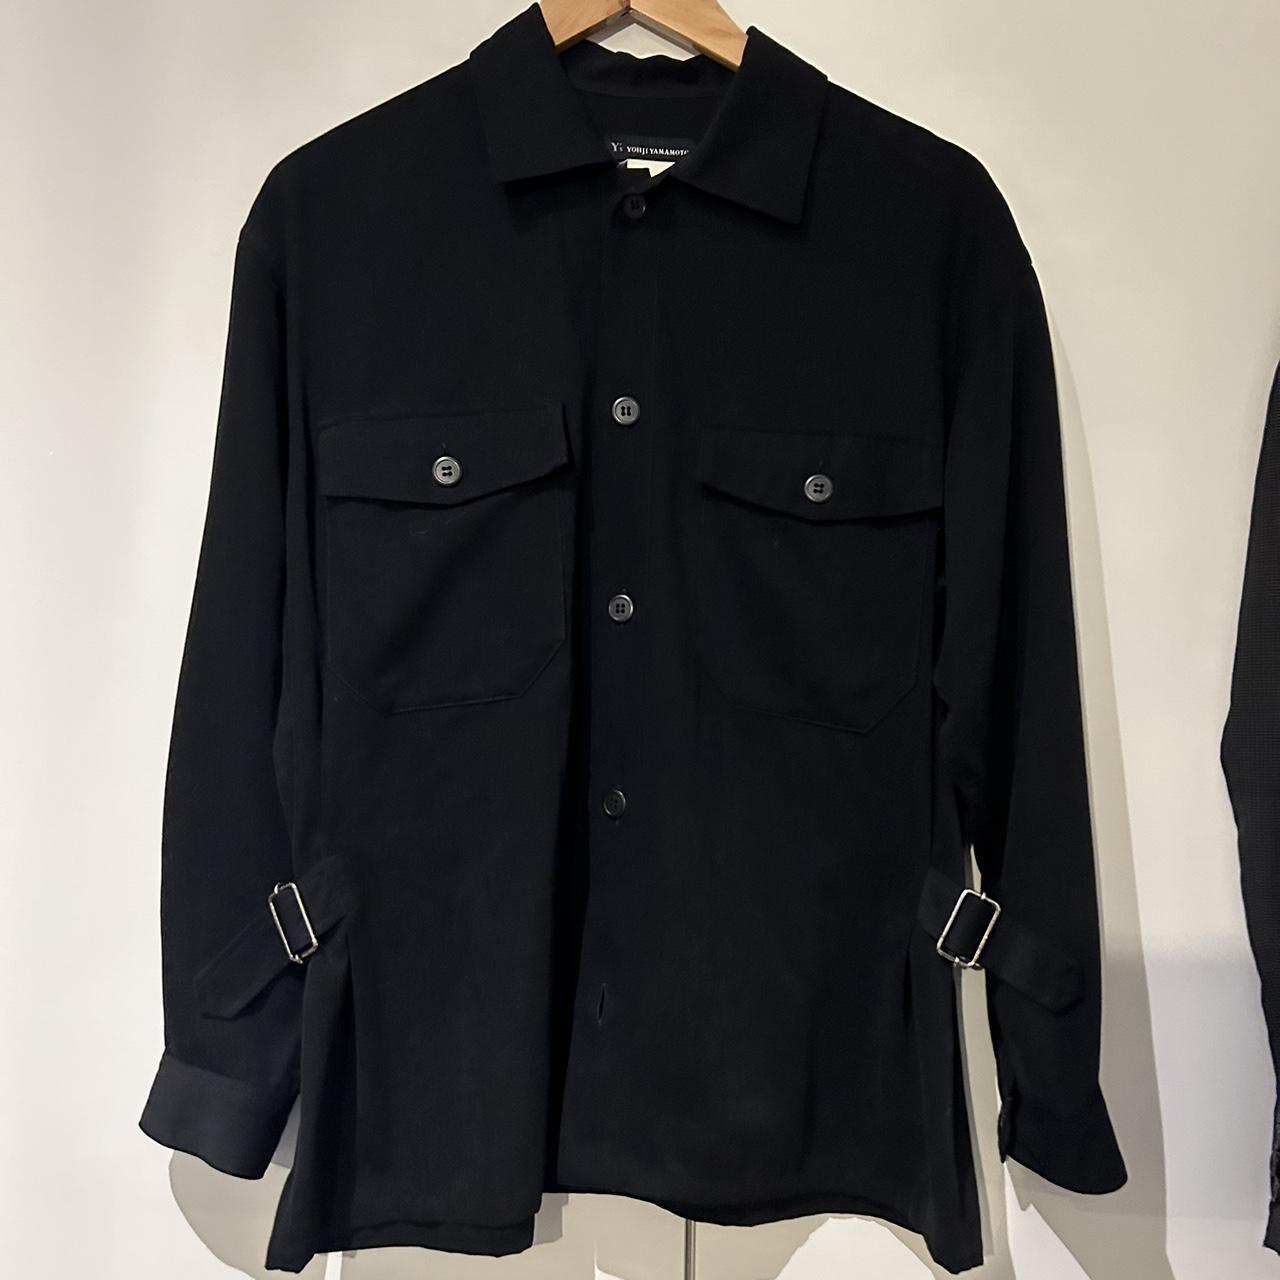 Archive Y’s era yohji Yamamoto shirt jacket Very... - Depop